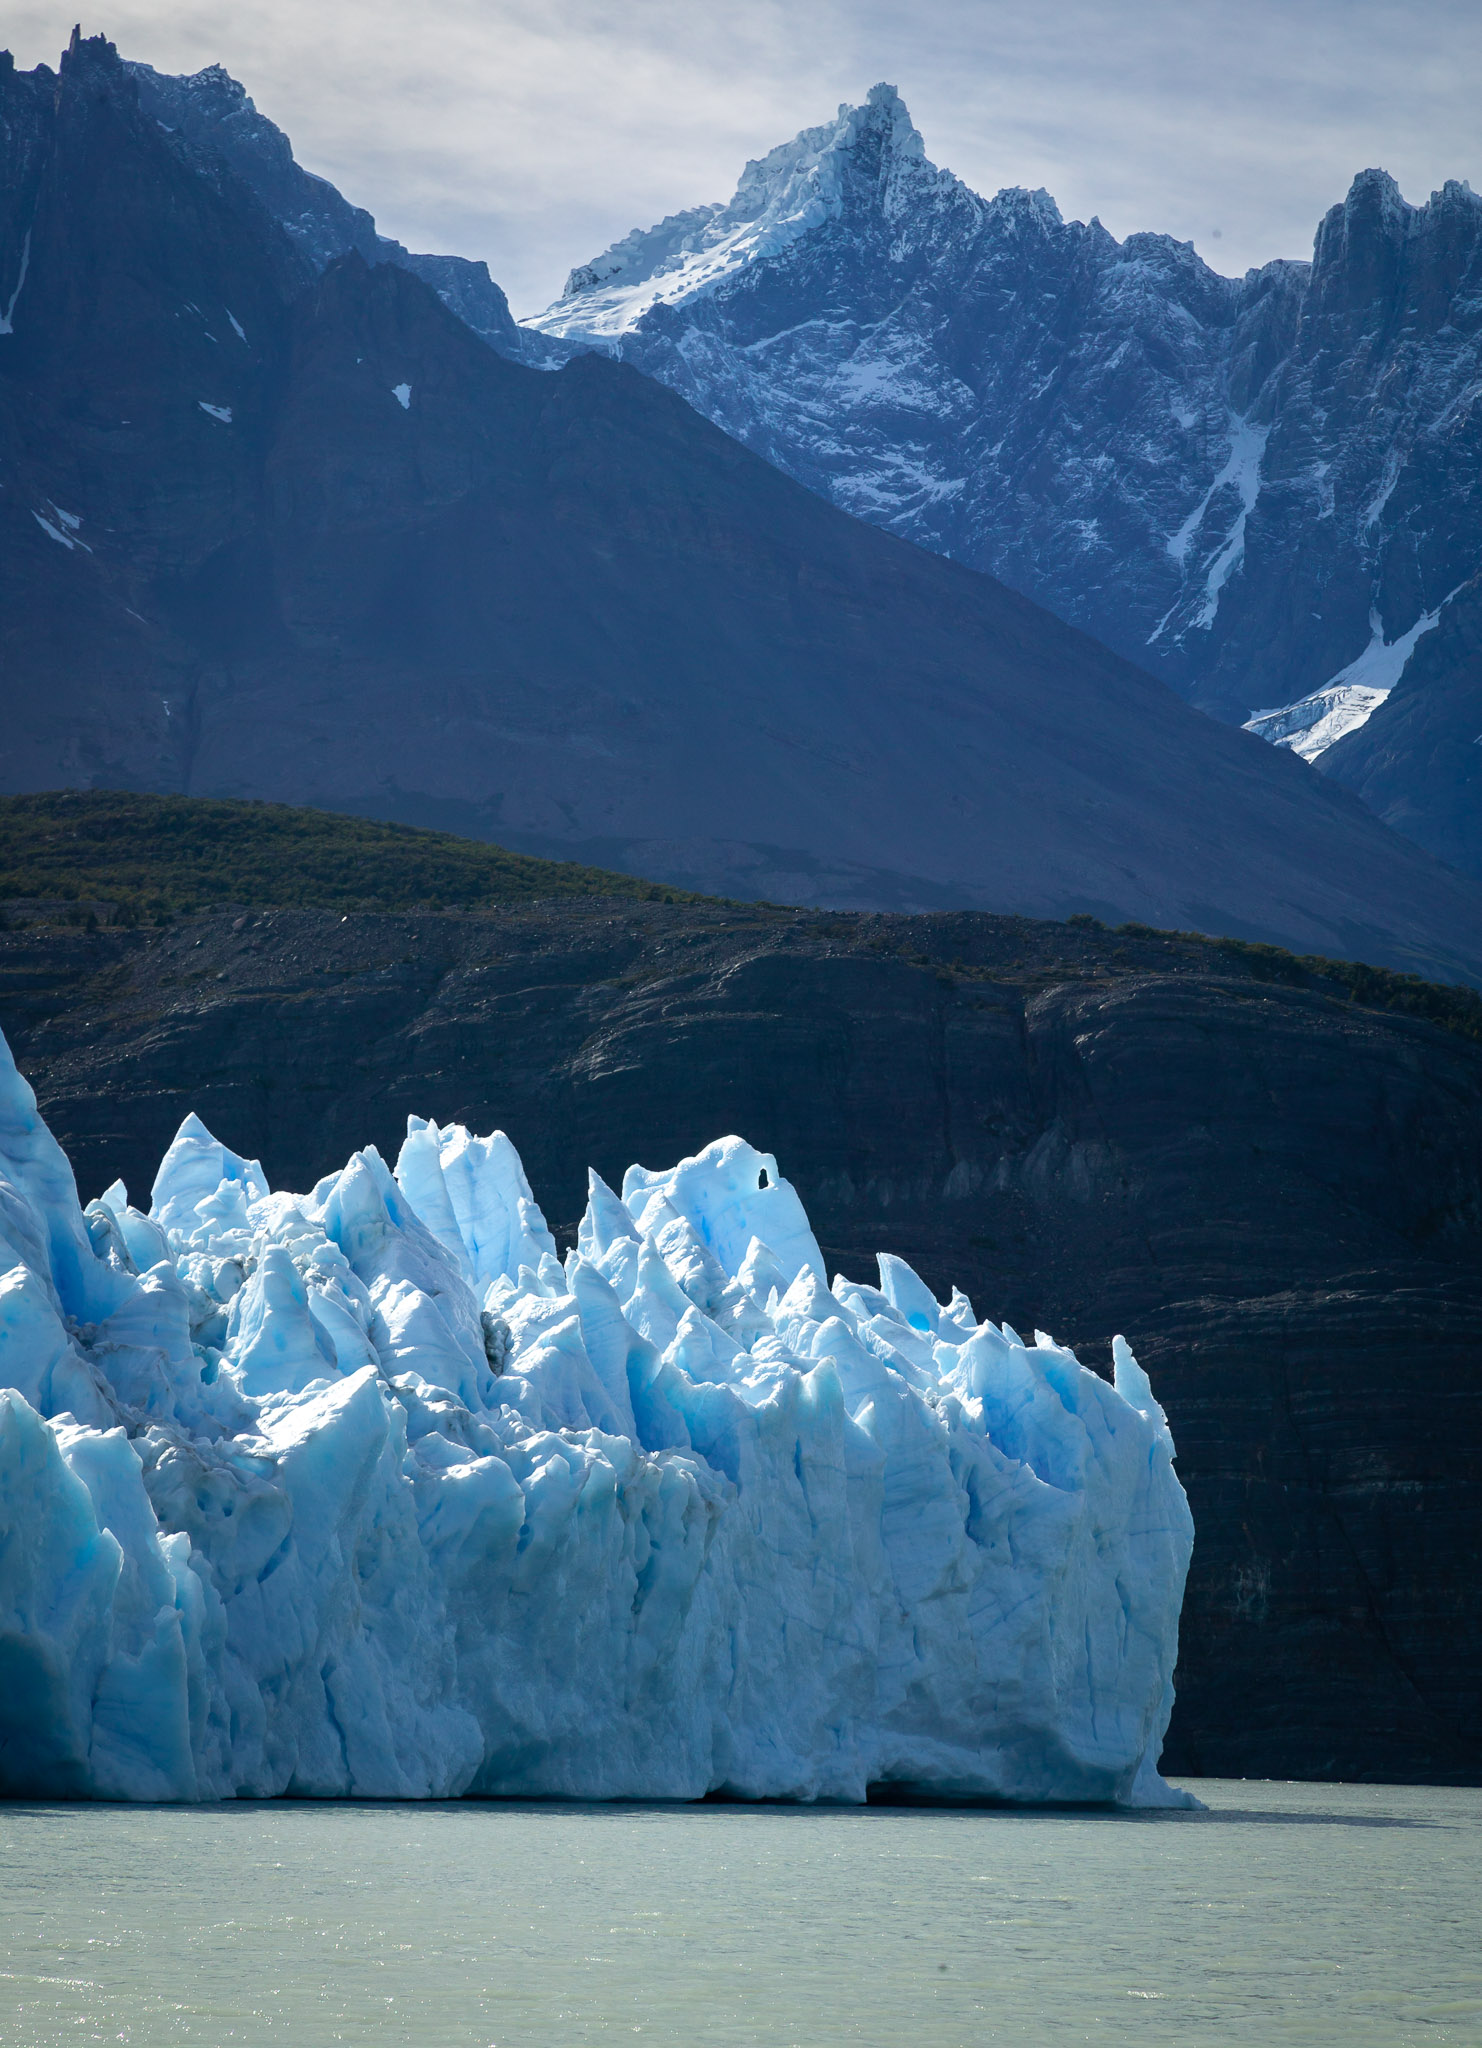 Cumbre Norte, Paine Grande in background, Glaciar Grey in foreground